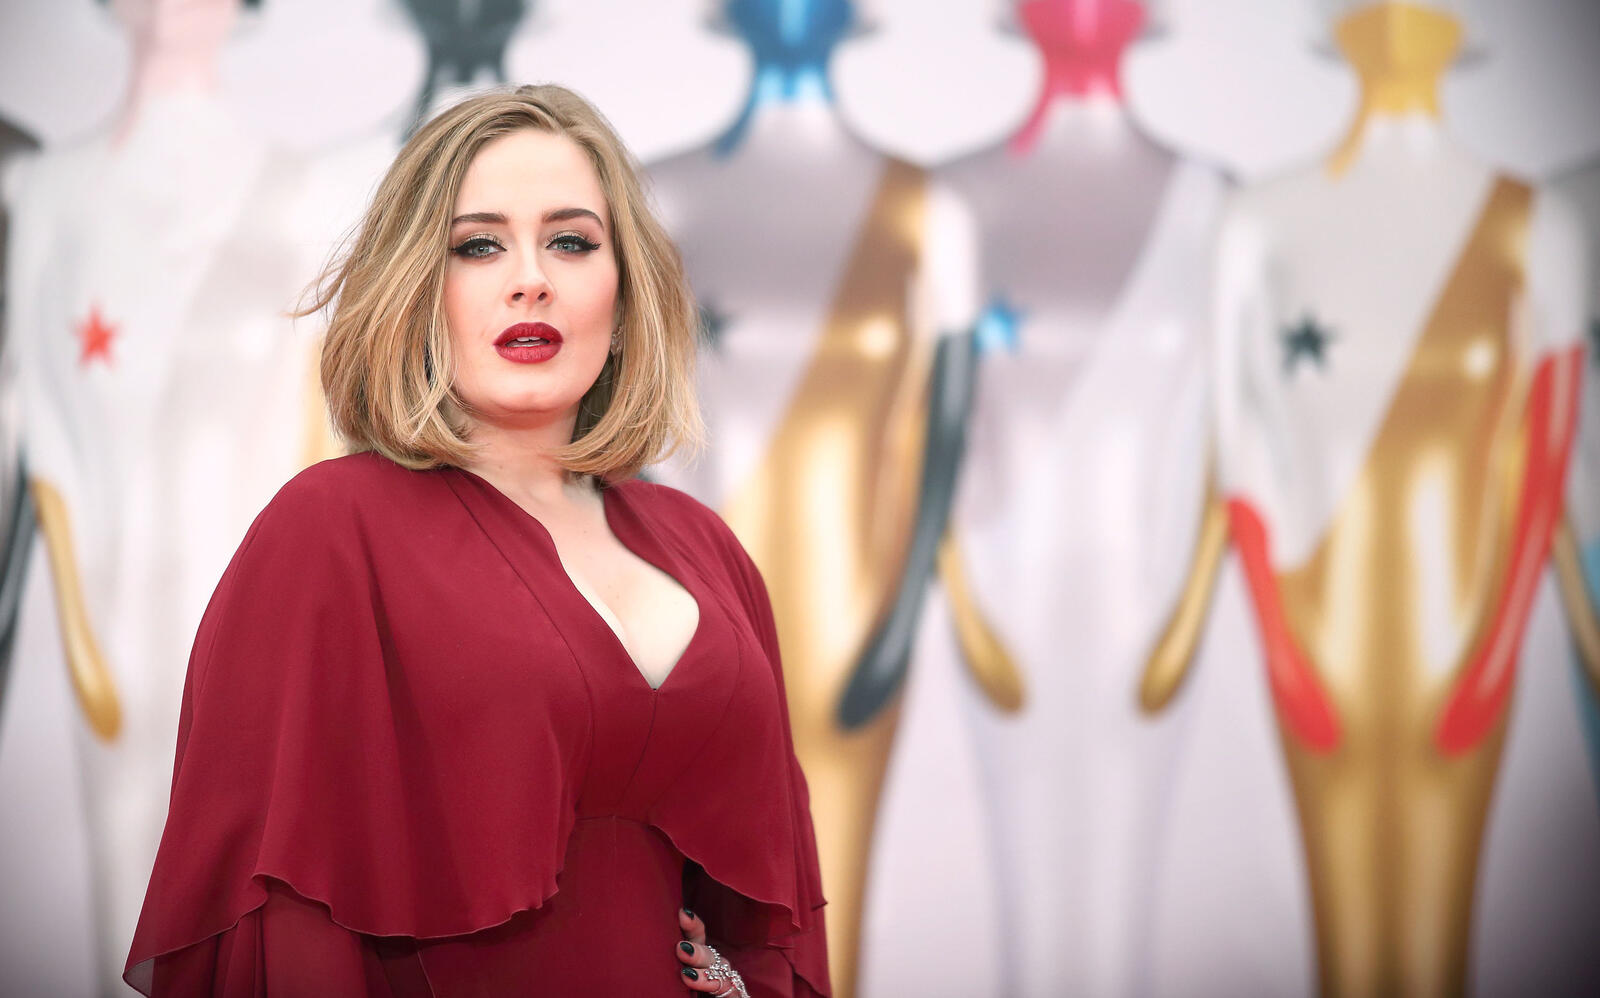 Wallpapers Adele singer celebrity on the desktop